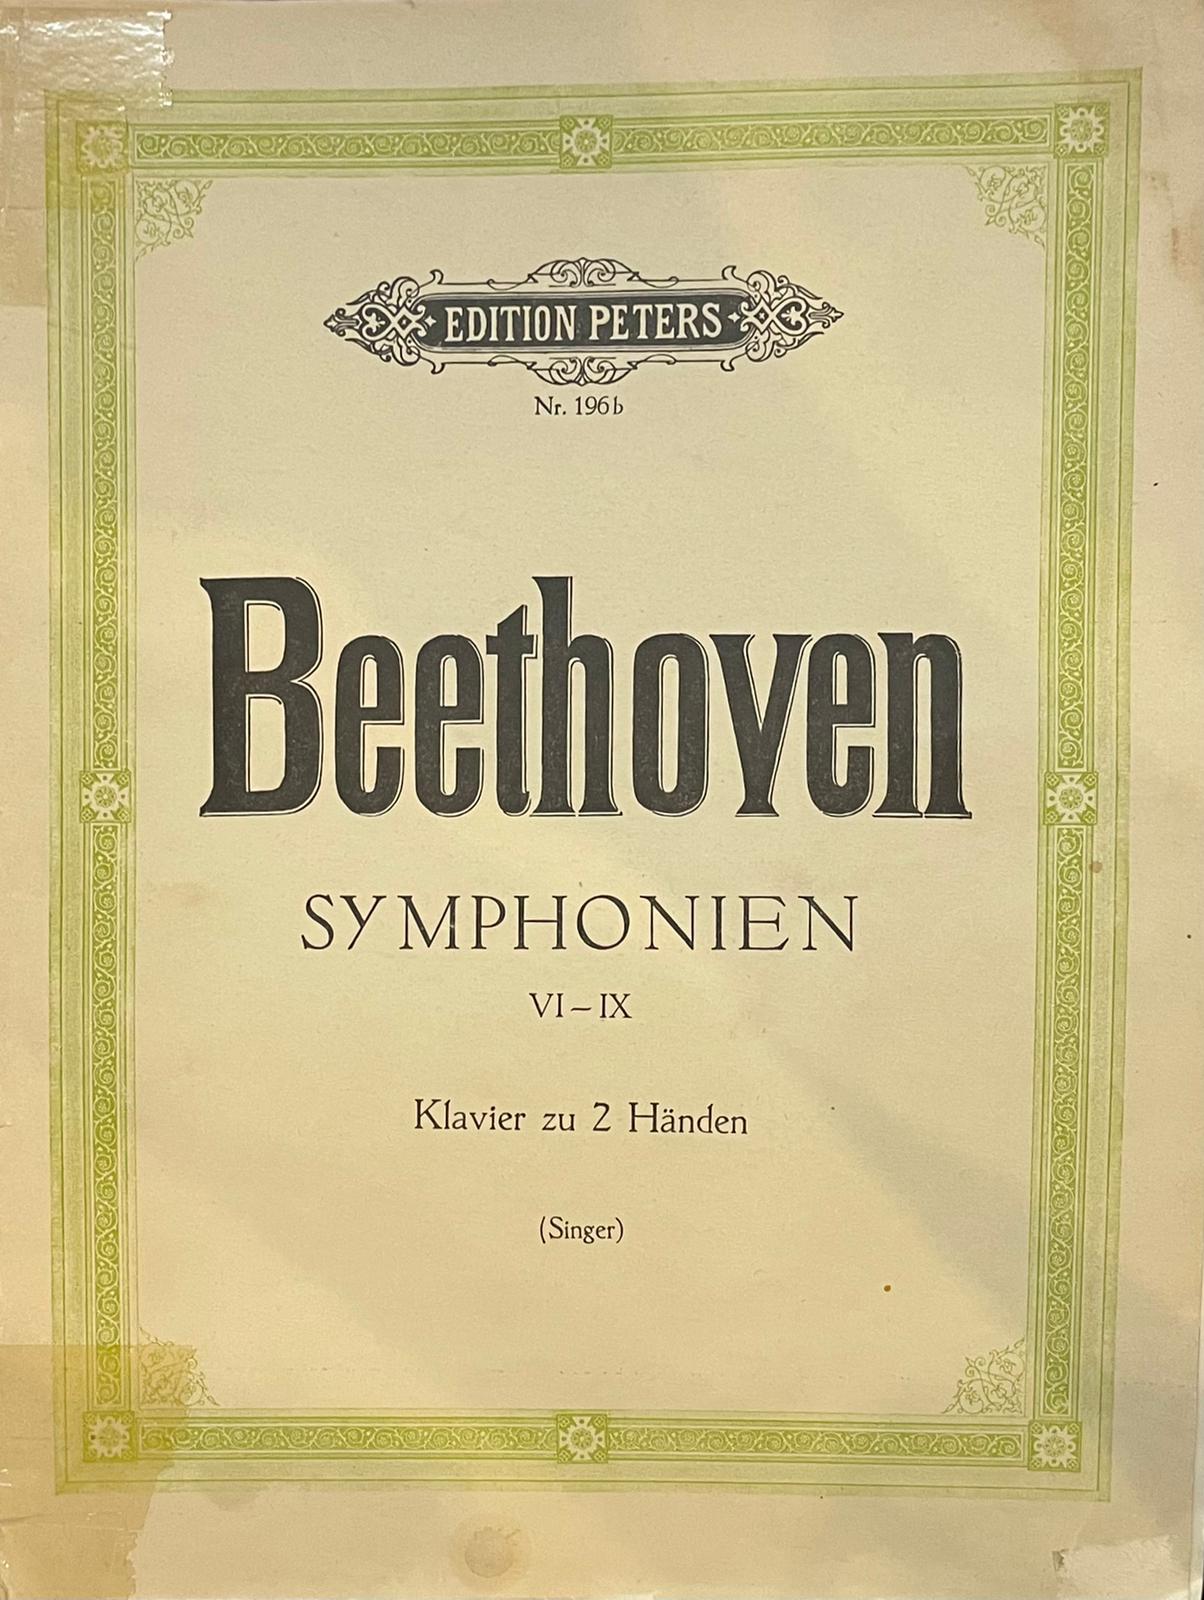 Beethoven Symphonien VI-IX (Klavier)